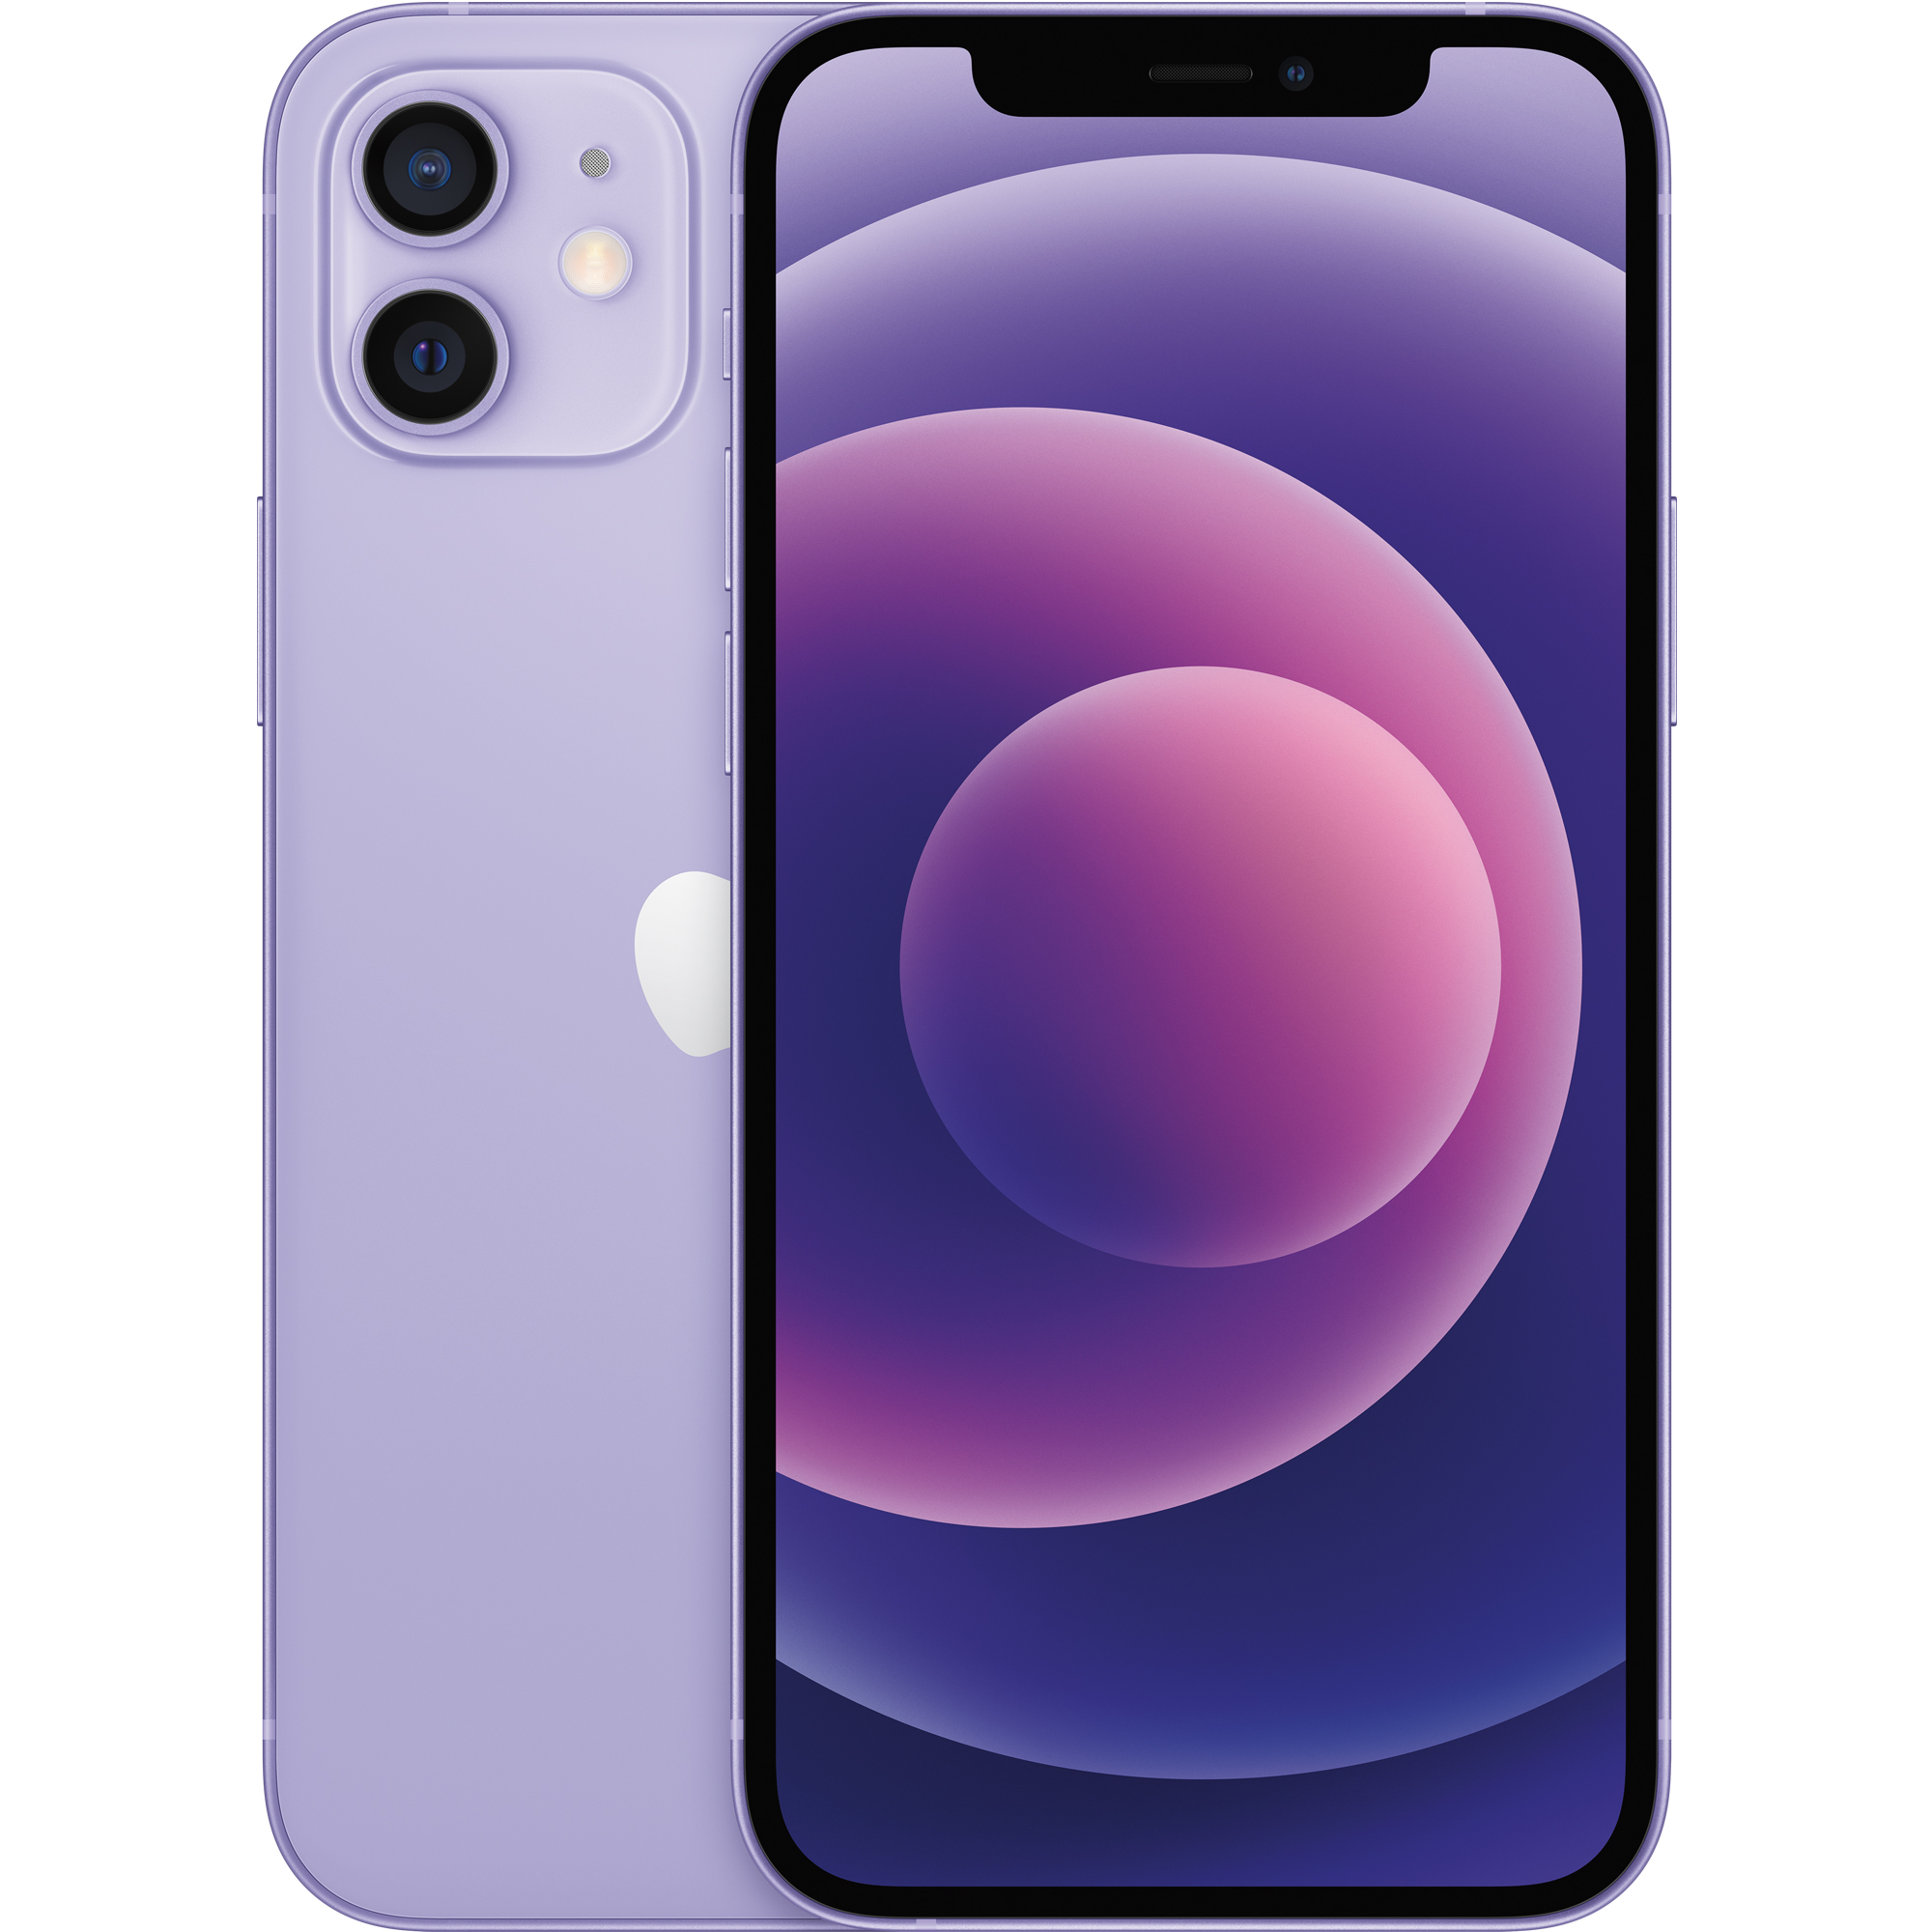 Total by Verizon Apple iPhone 12, 64GB, Purple- Prepaid Smartphone [Locked to Total by Verizon] - image 1 of 10